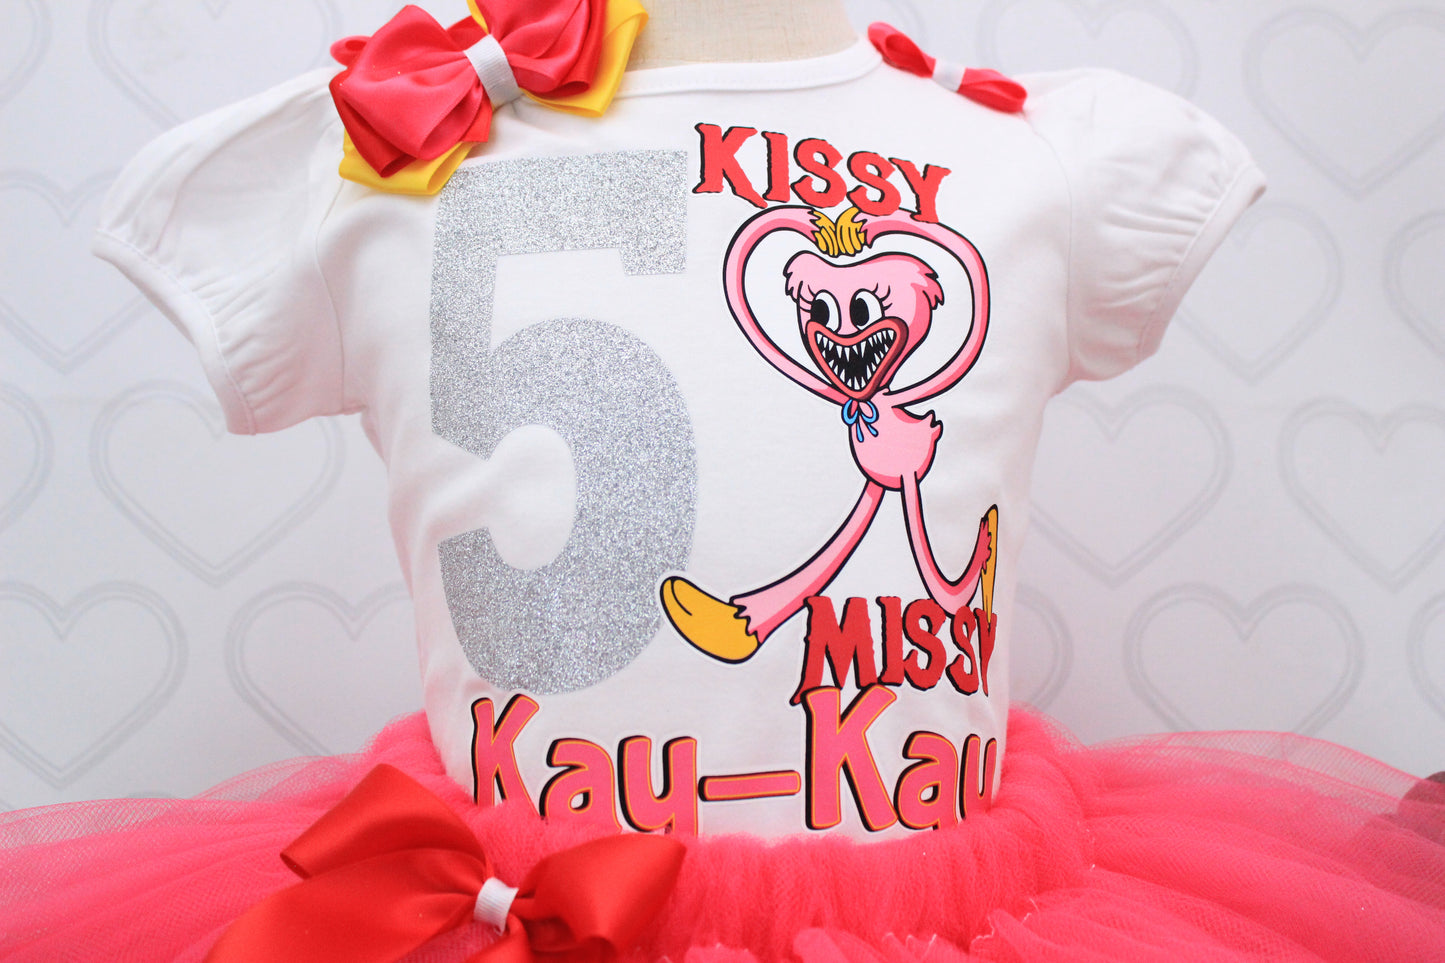 Kissy Missy tutu set-Kissy Missy outfit-Kissy Missy dress-Kissy Missy birthday